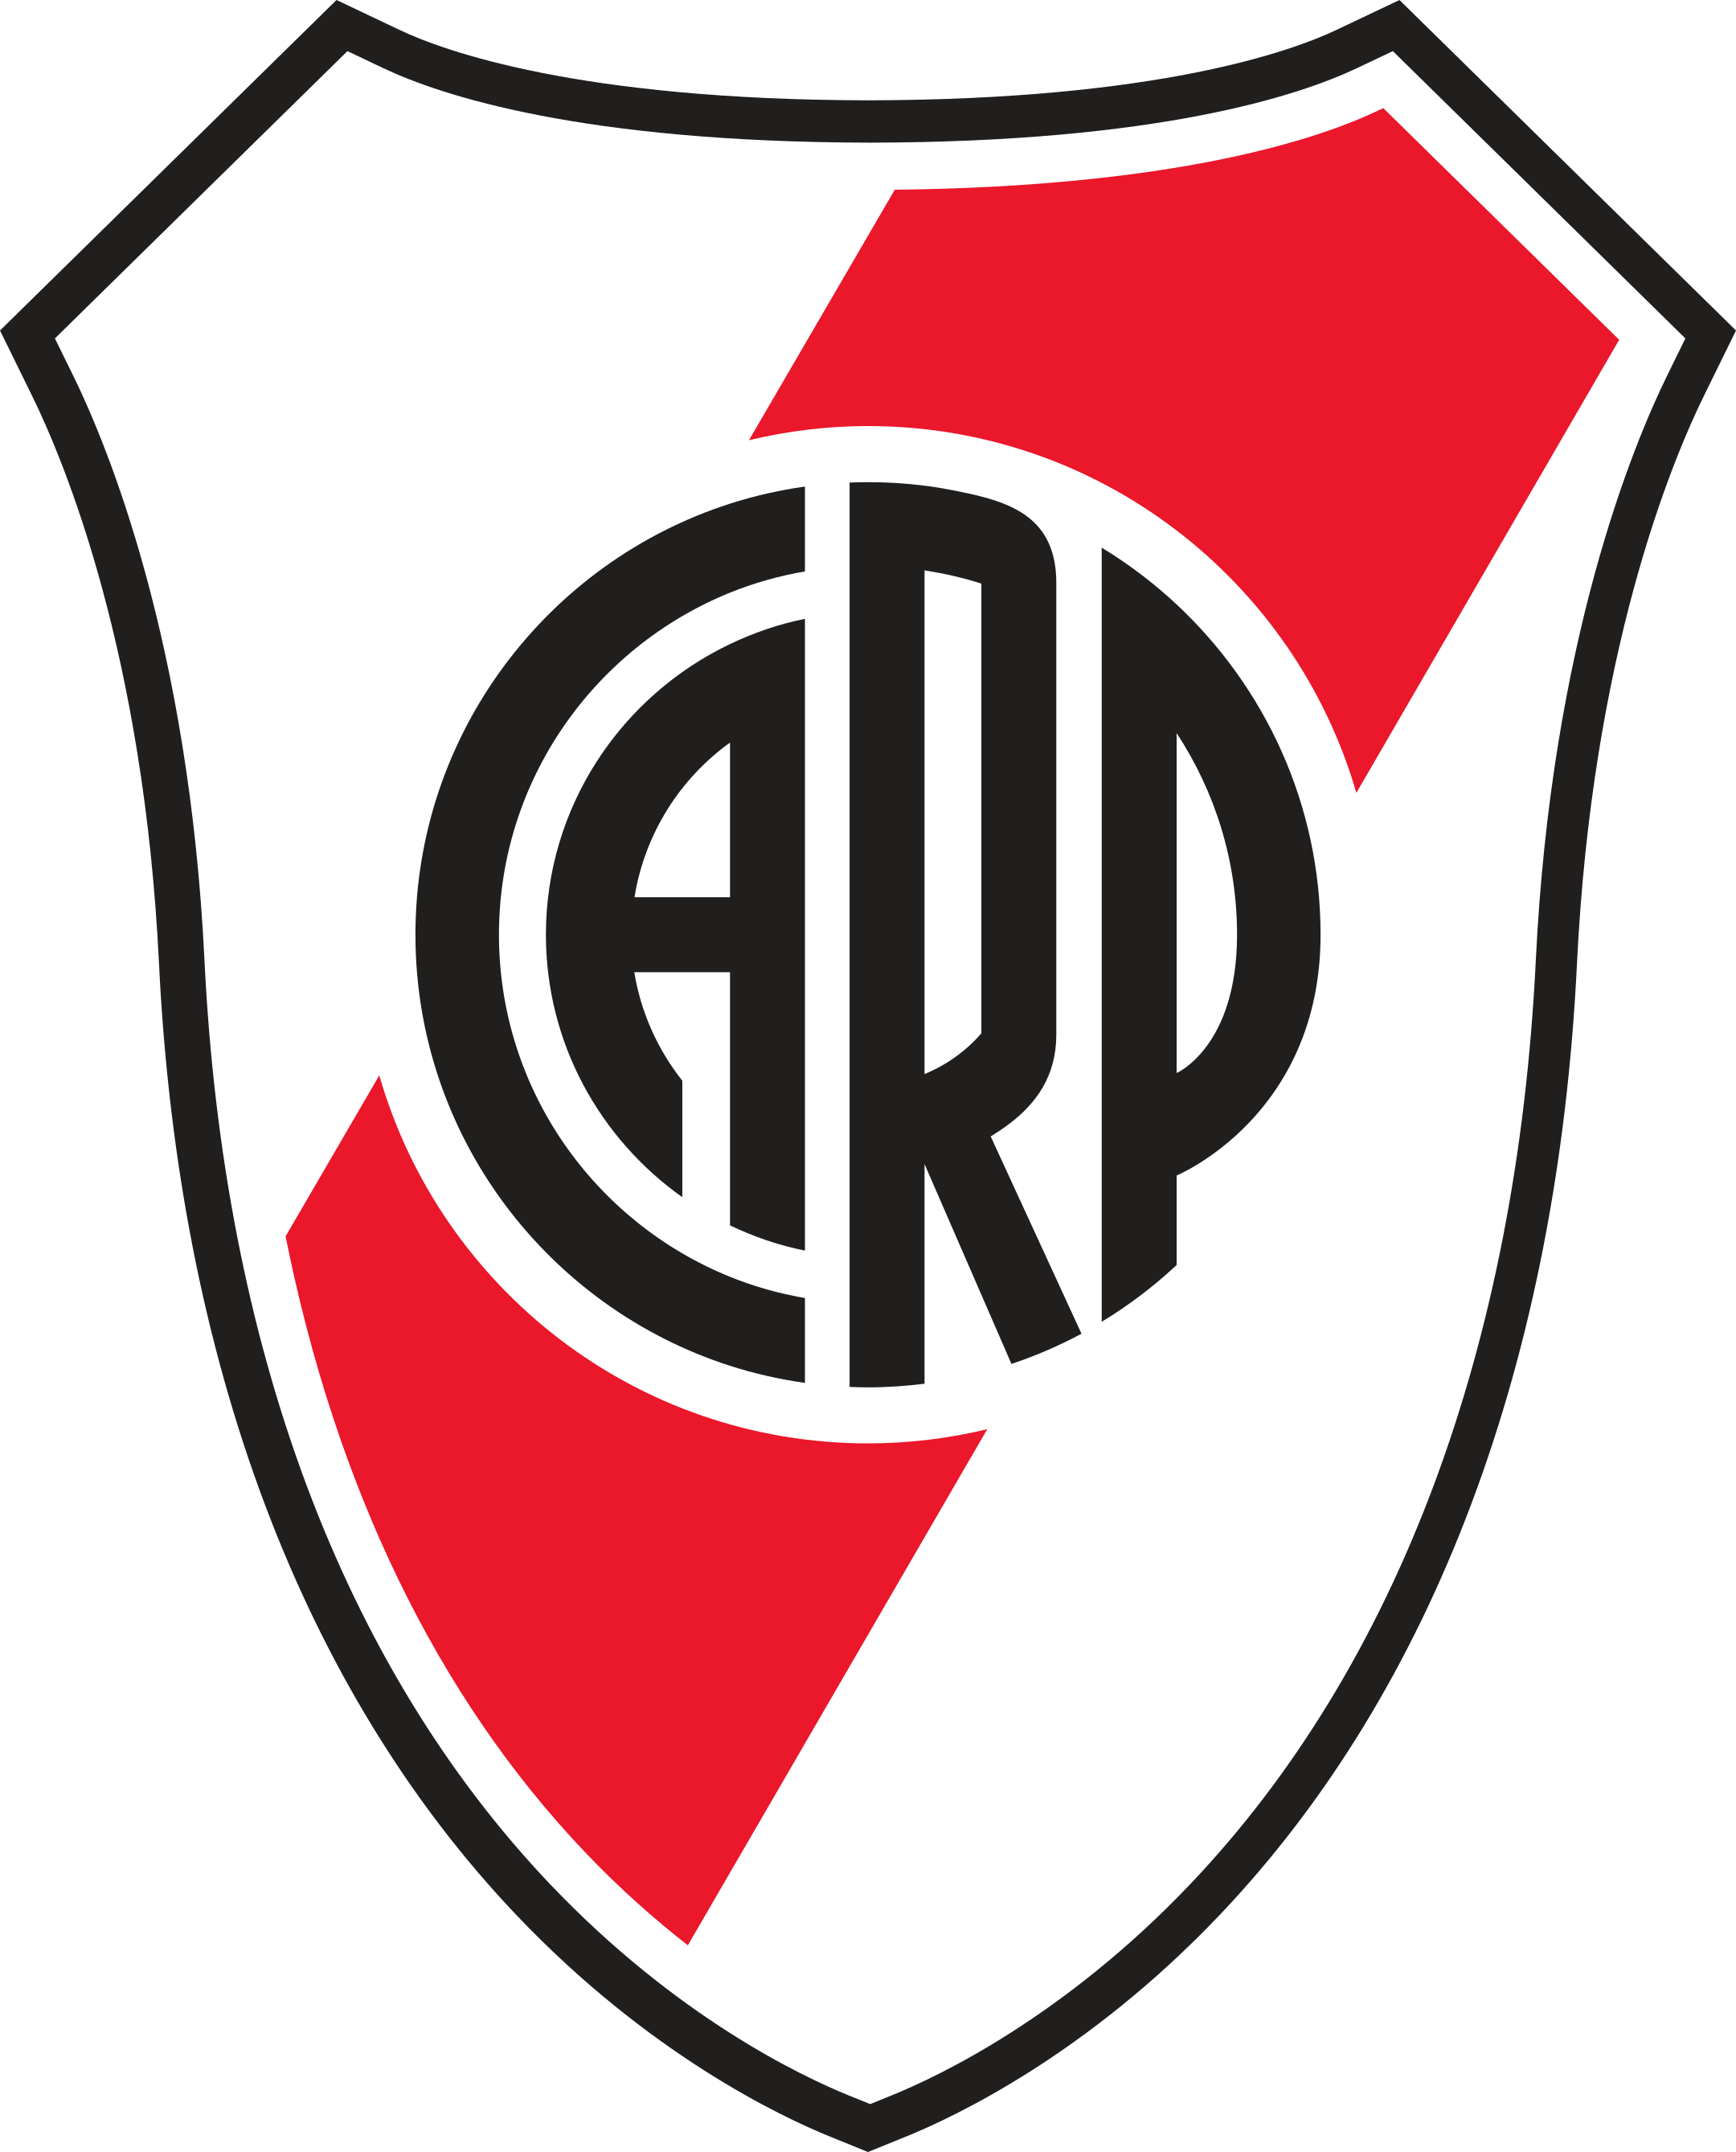 river plate logo 1 1 - River Plate Logo